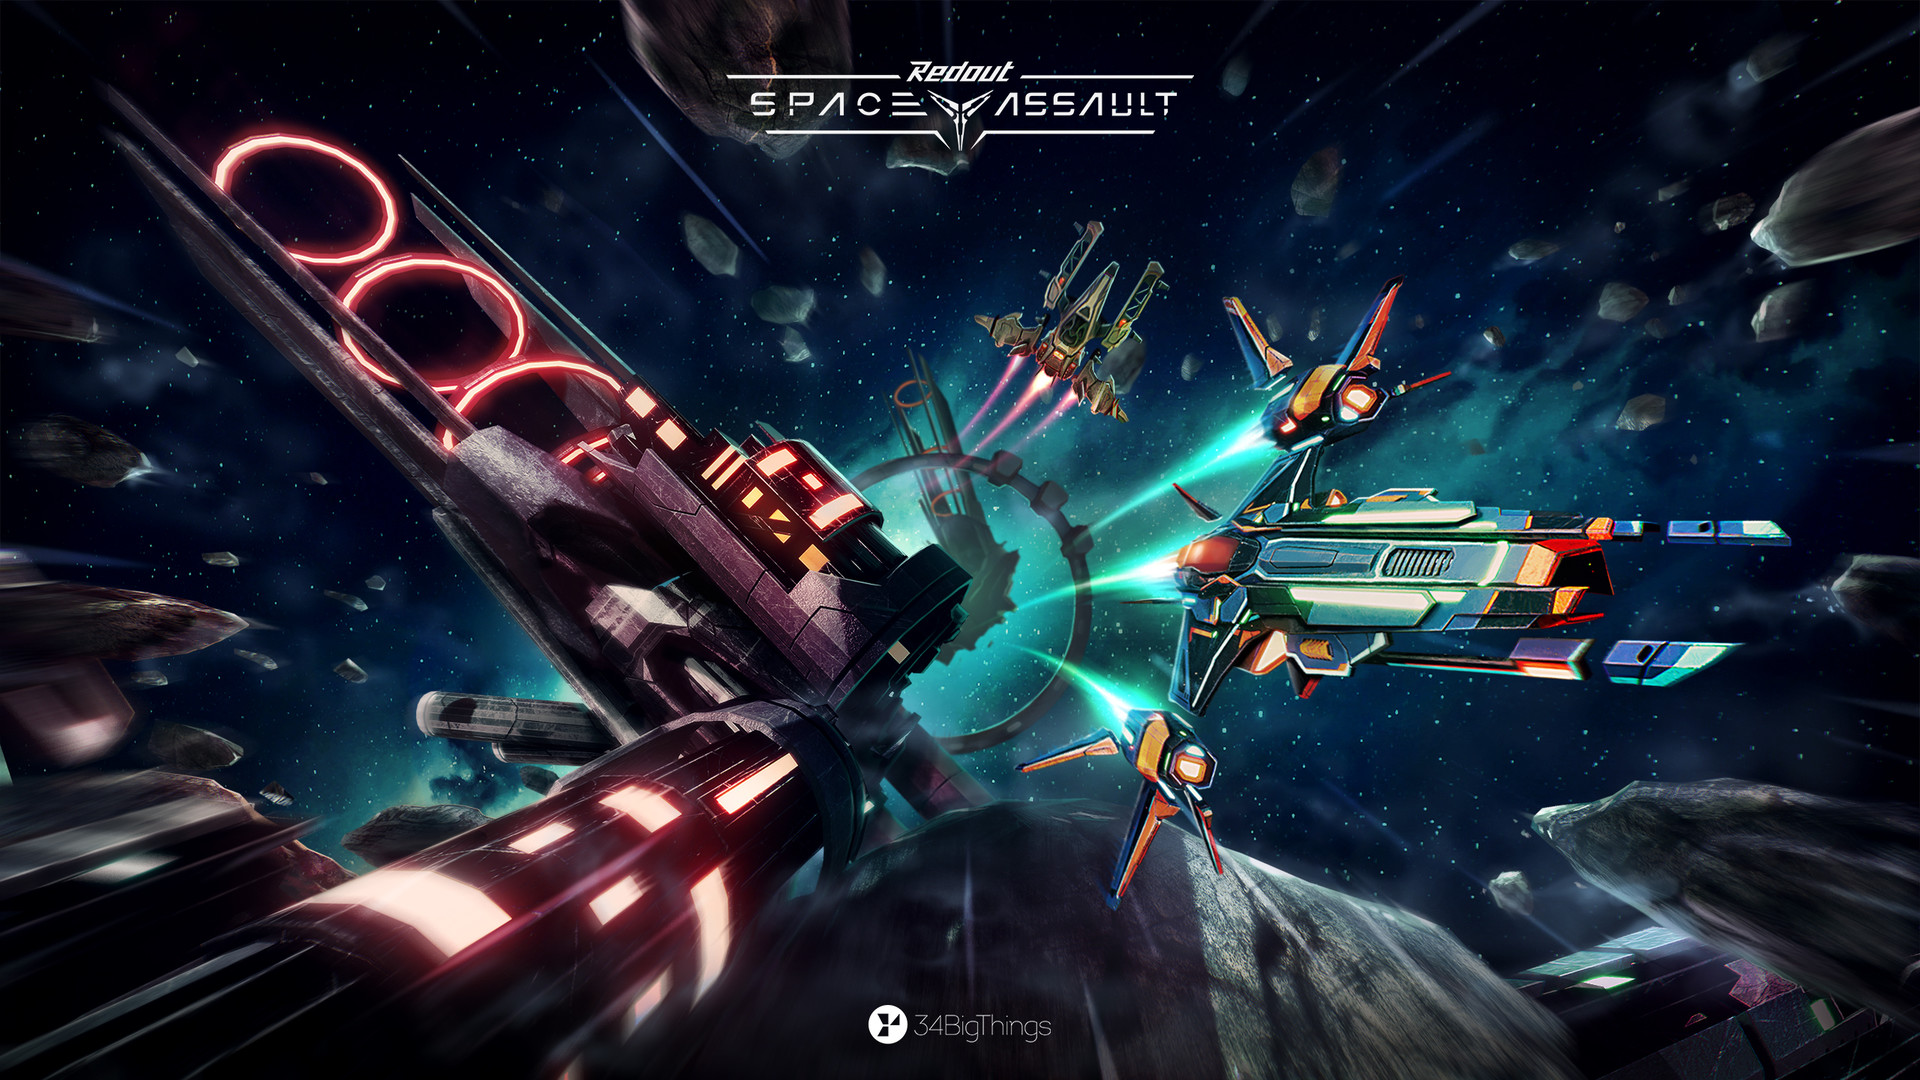 Redout: Space Assault Soundtrack Featured Screenshot #1